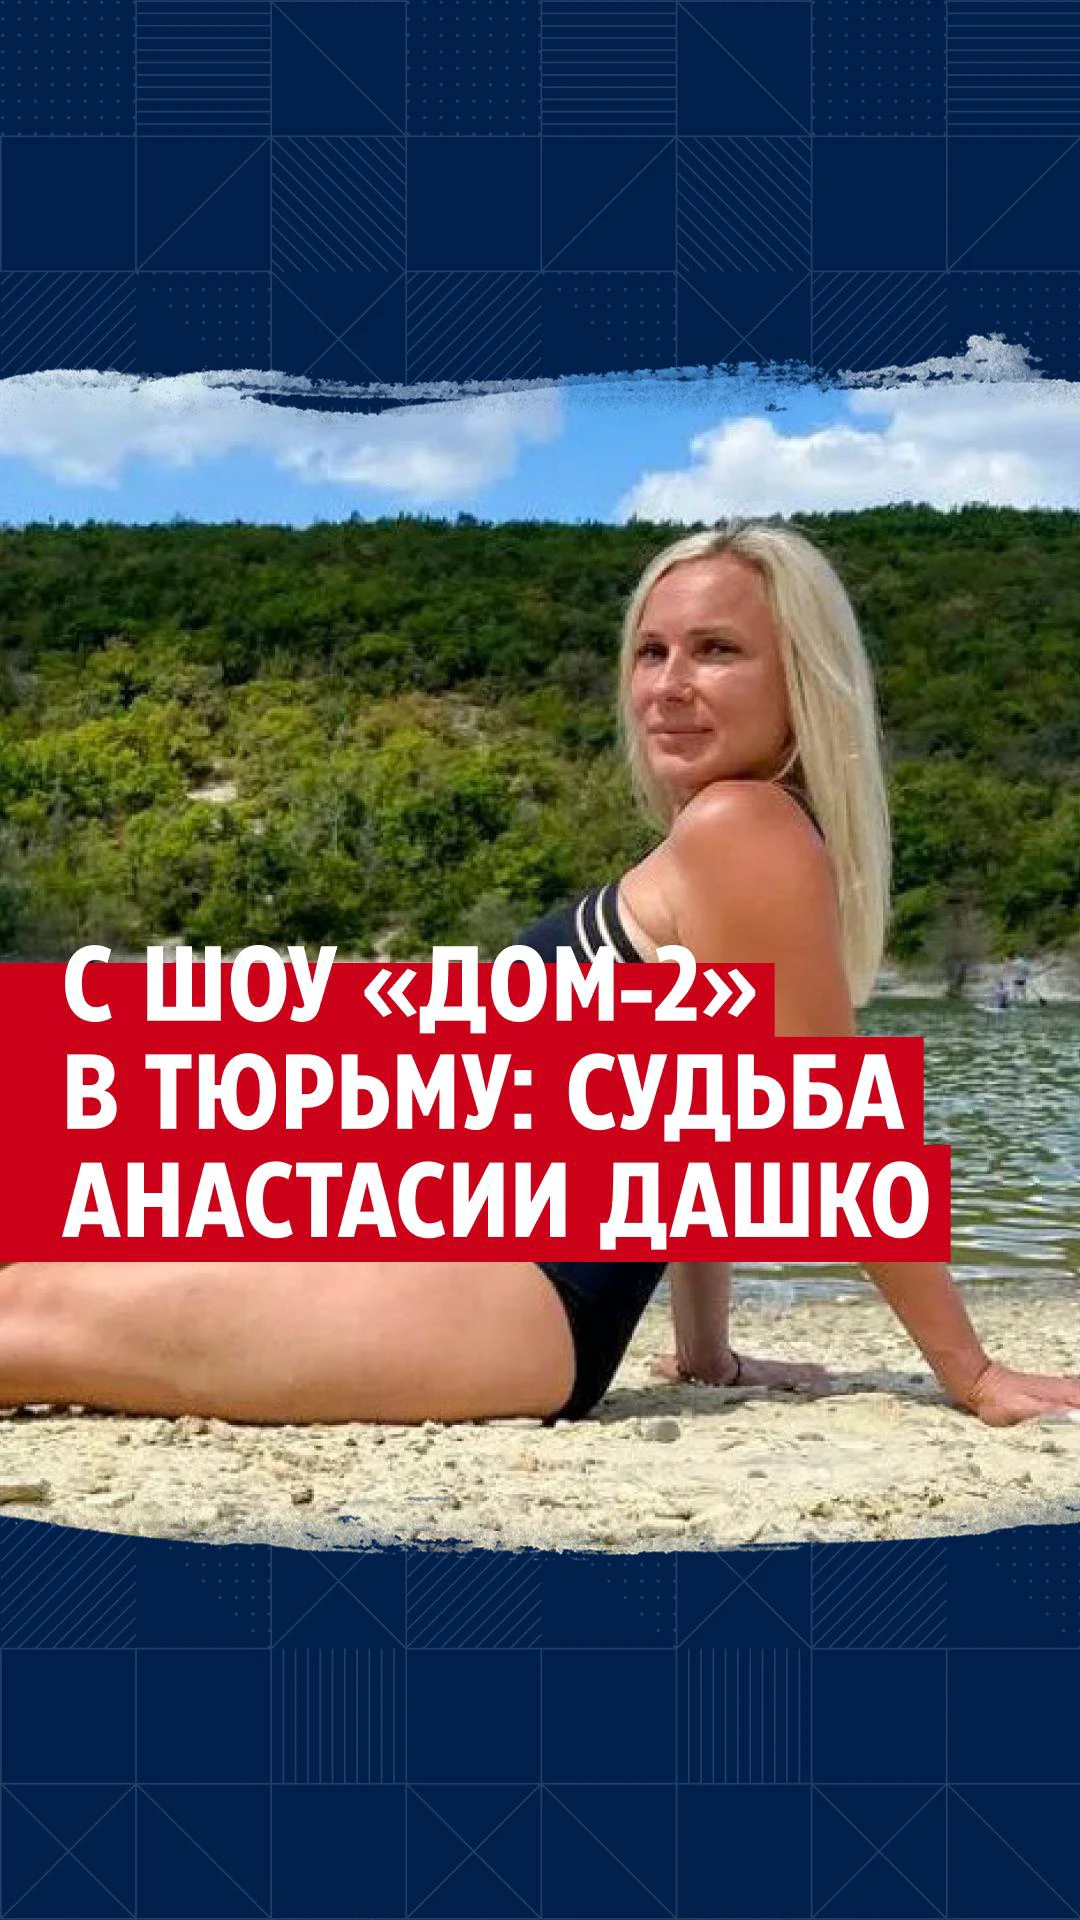 Анастасия дашко голая порно видео на afisha-piknik.ru